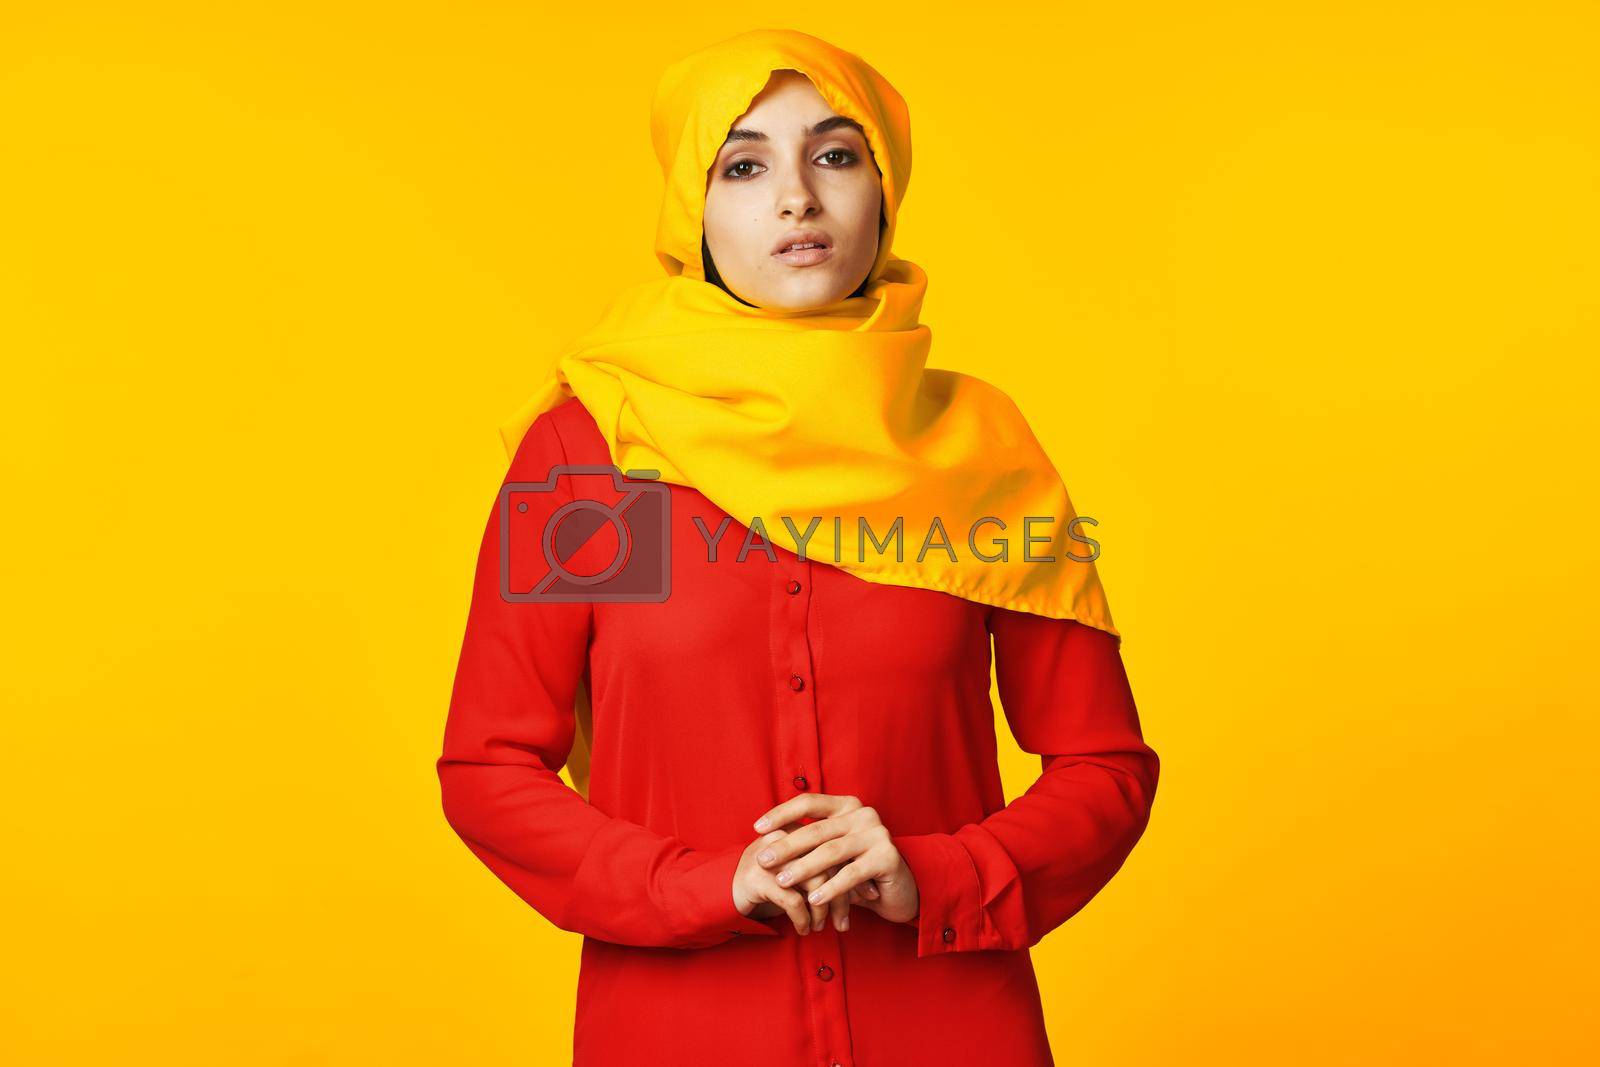 Royalty free image of muslim woman wearing yellow hijab posing ethnicity yellow background by Vichizh